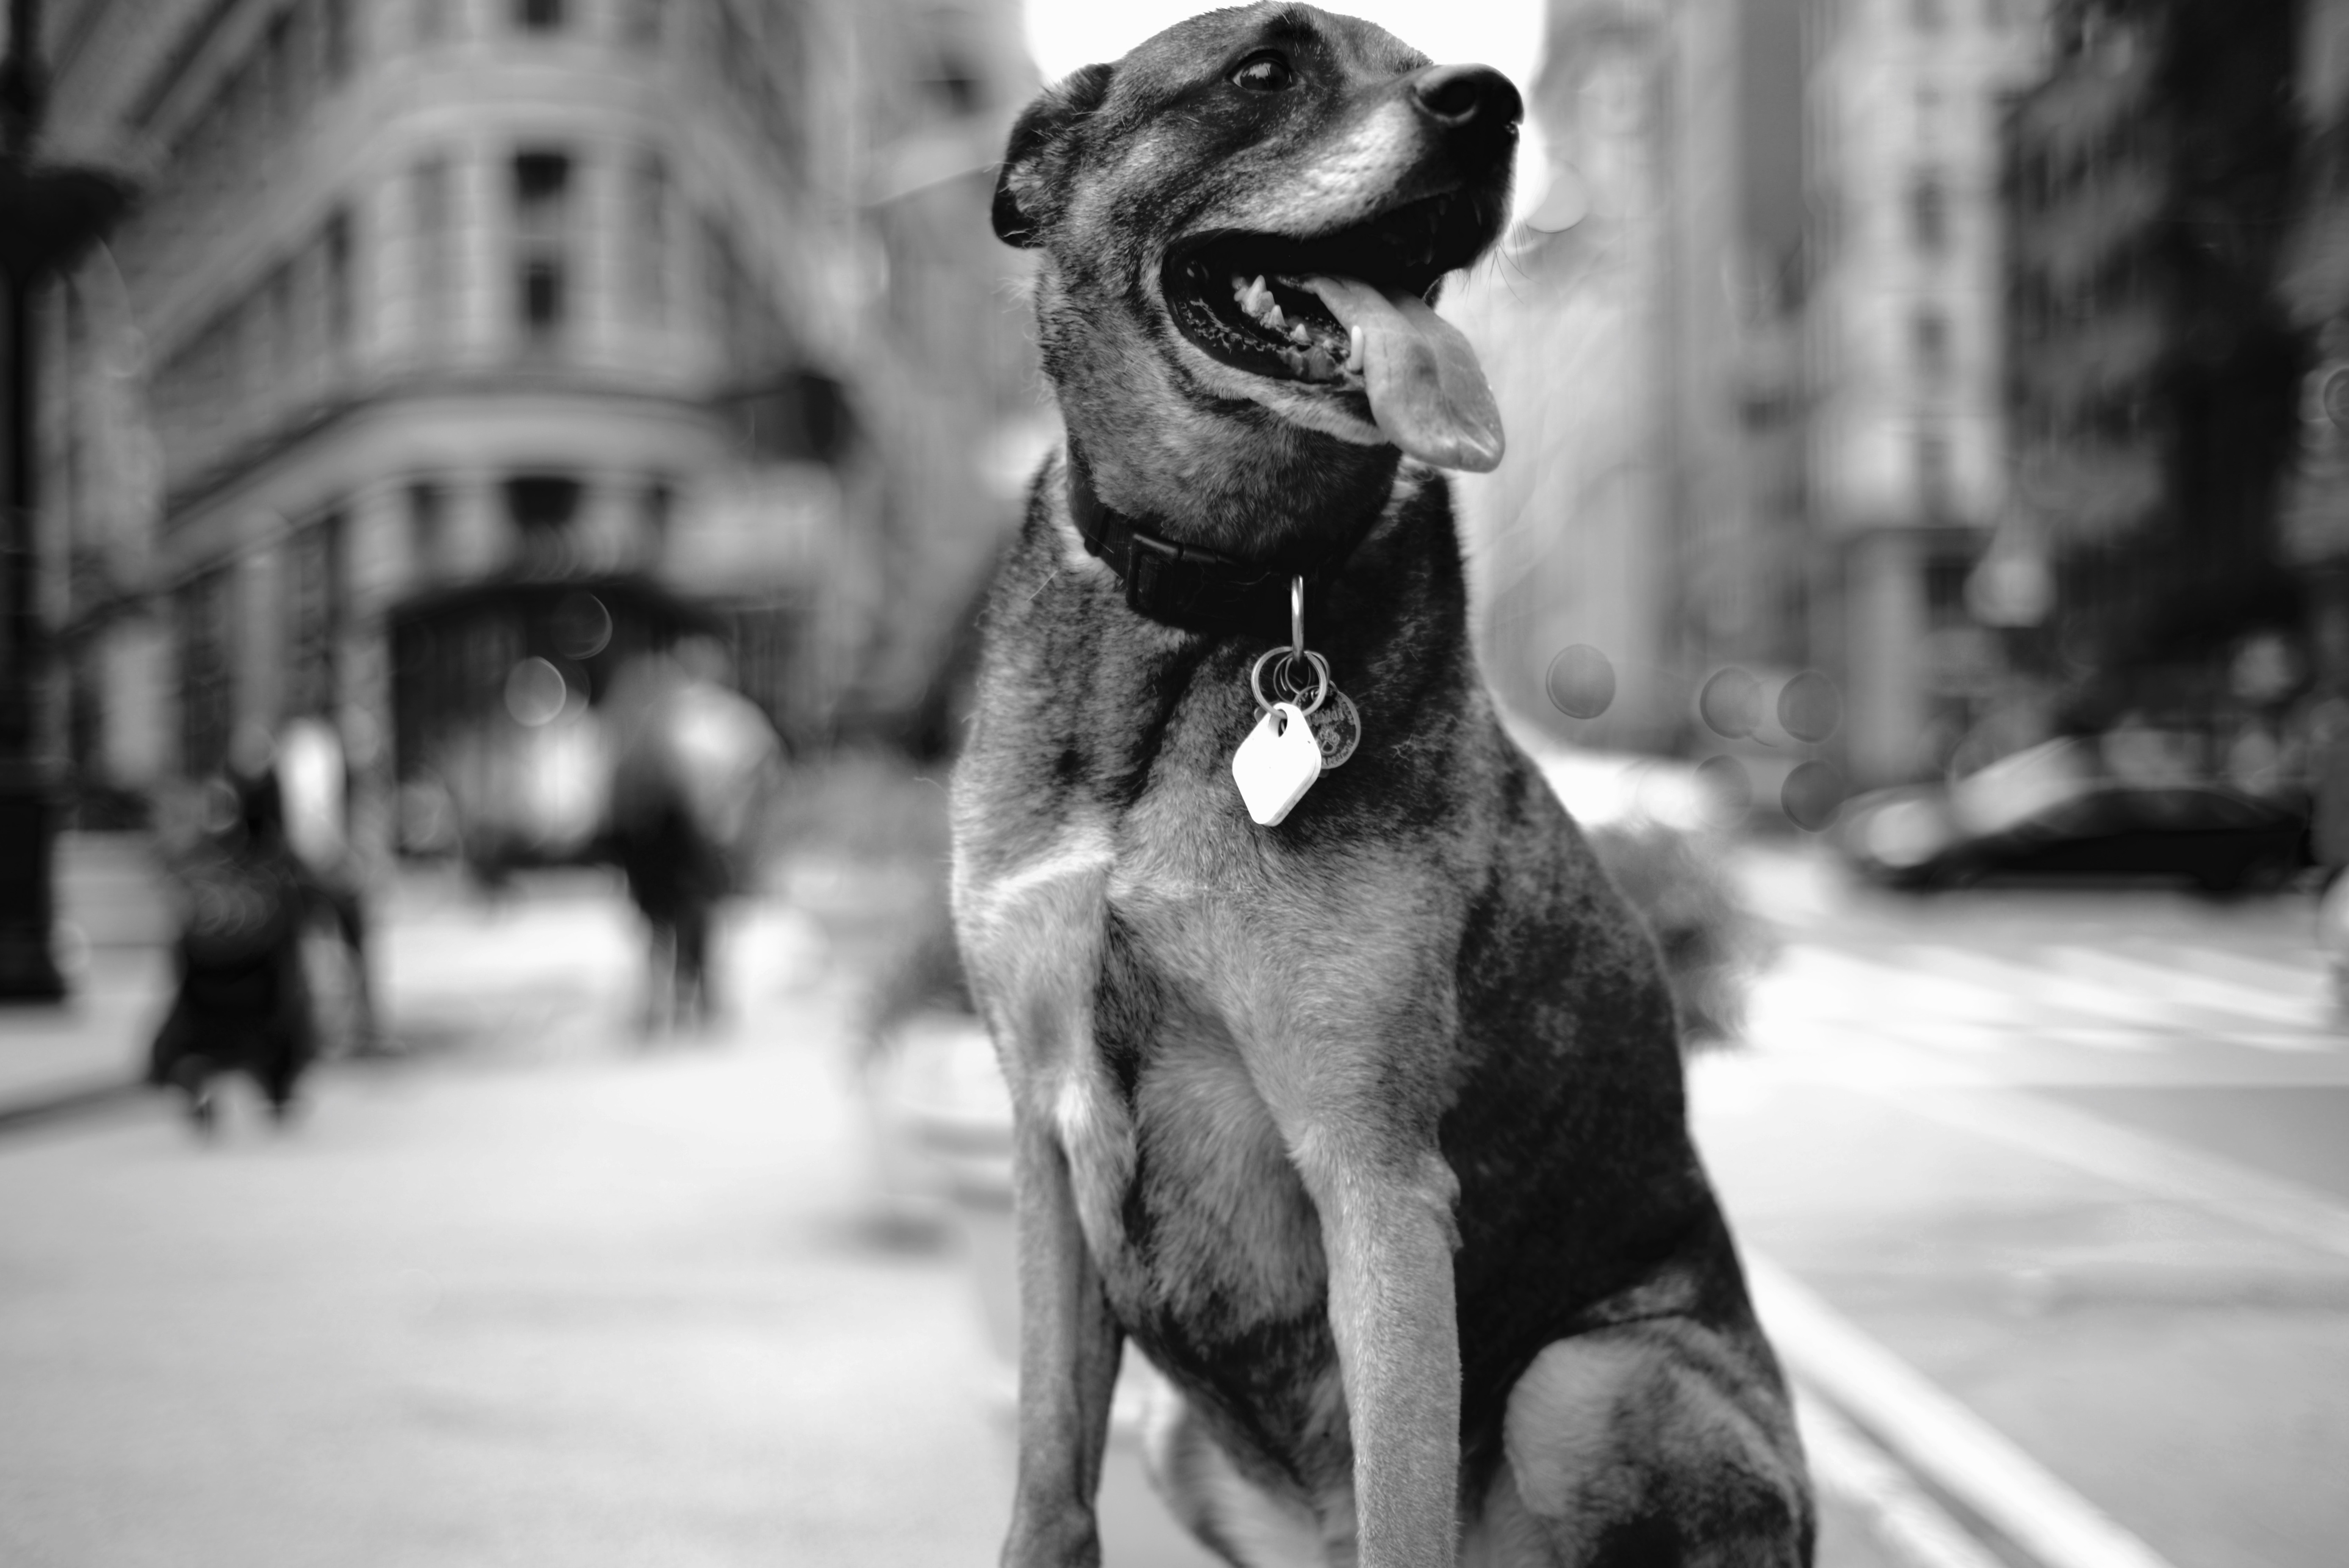 Natan Gesher's Belgian Malinois dog "Sharav" at Madison Square Park, New York City, in December 2015